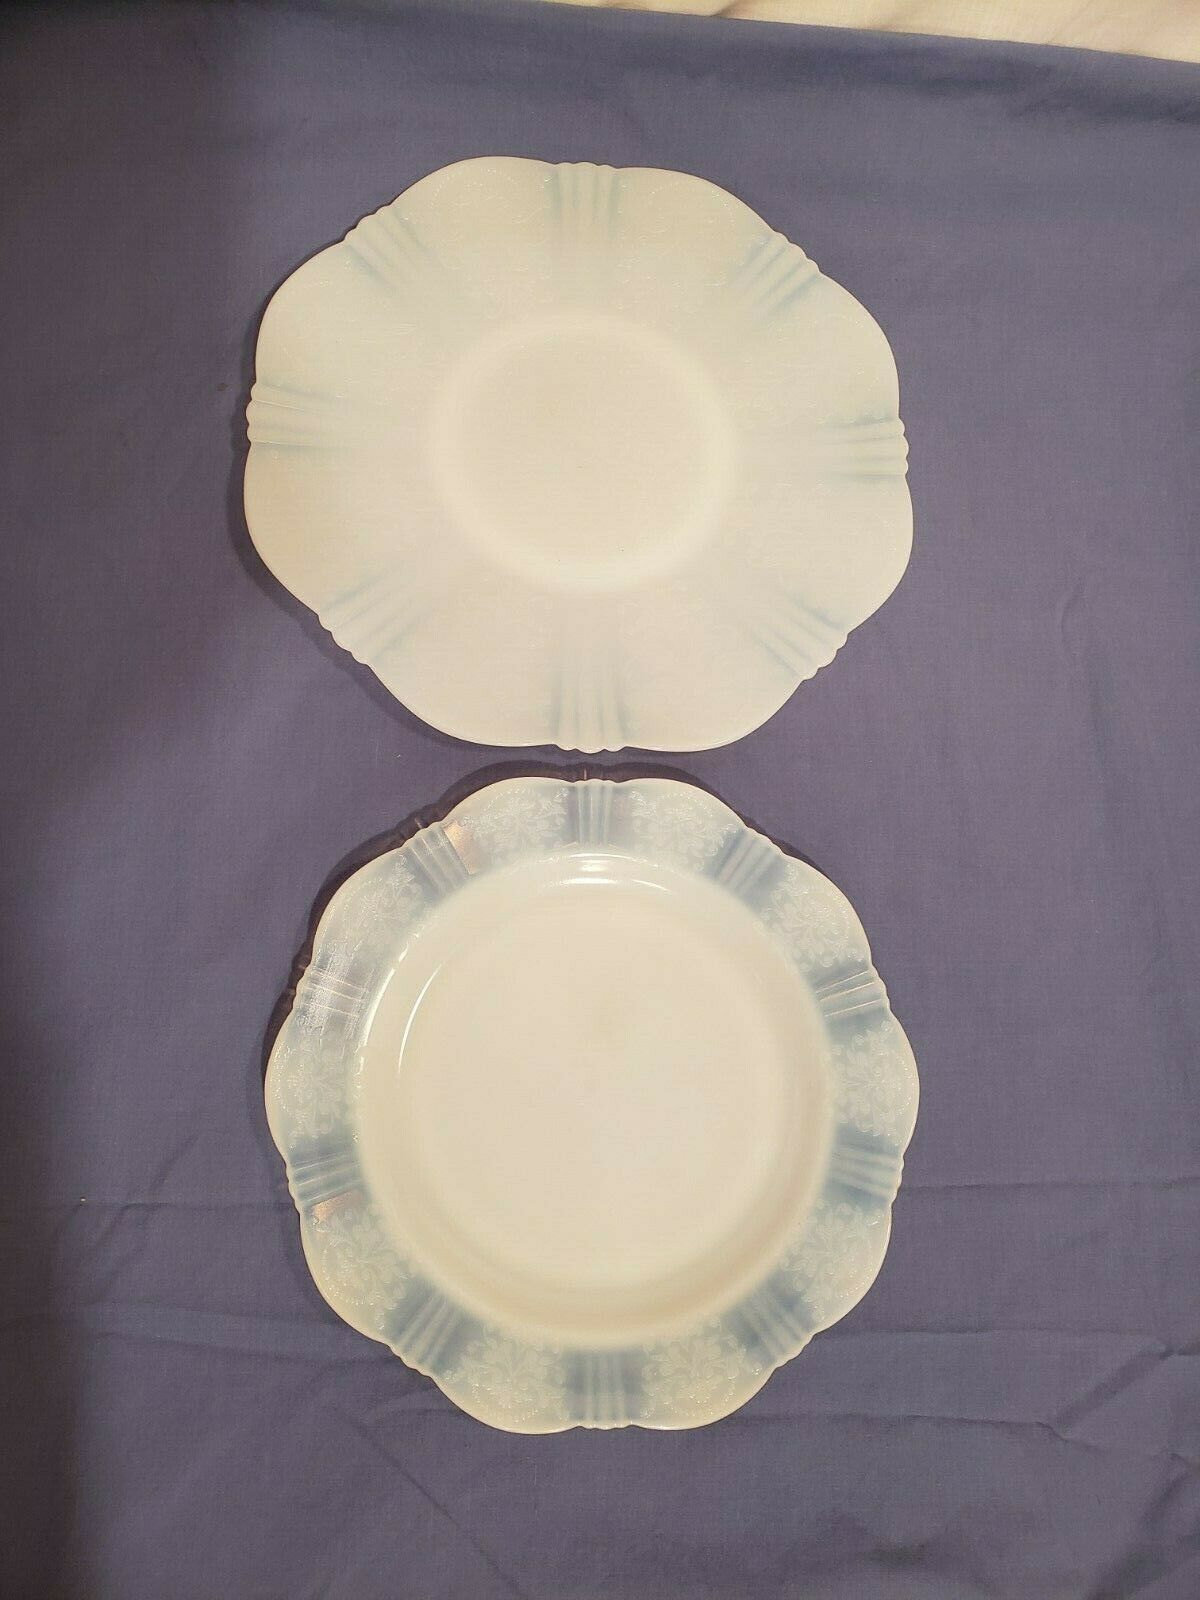 Vintage Macbeth-evans Sweetheart Monax White Depression Plates, 2 Sizes